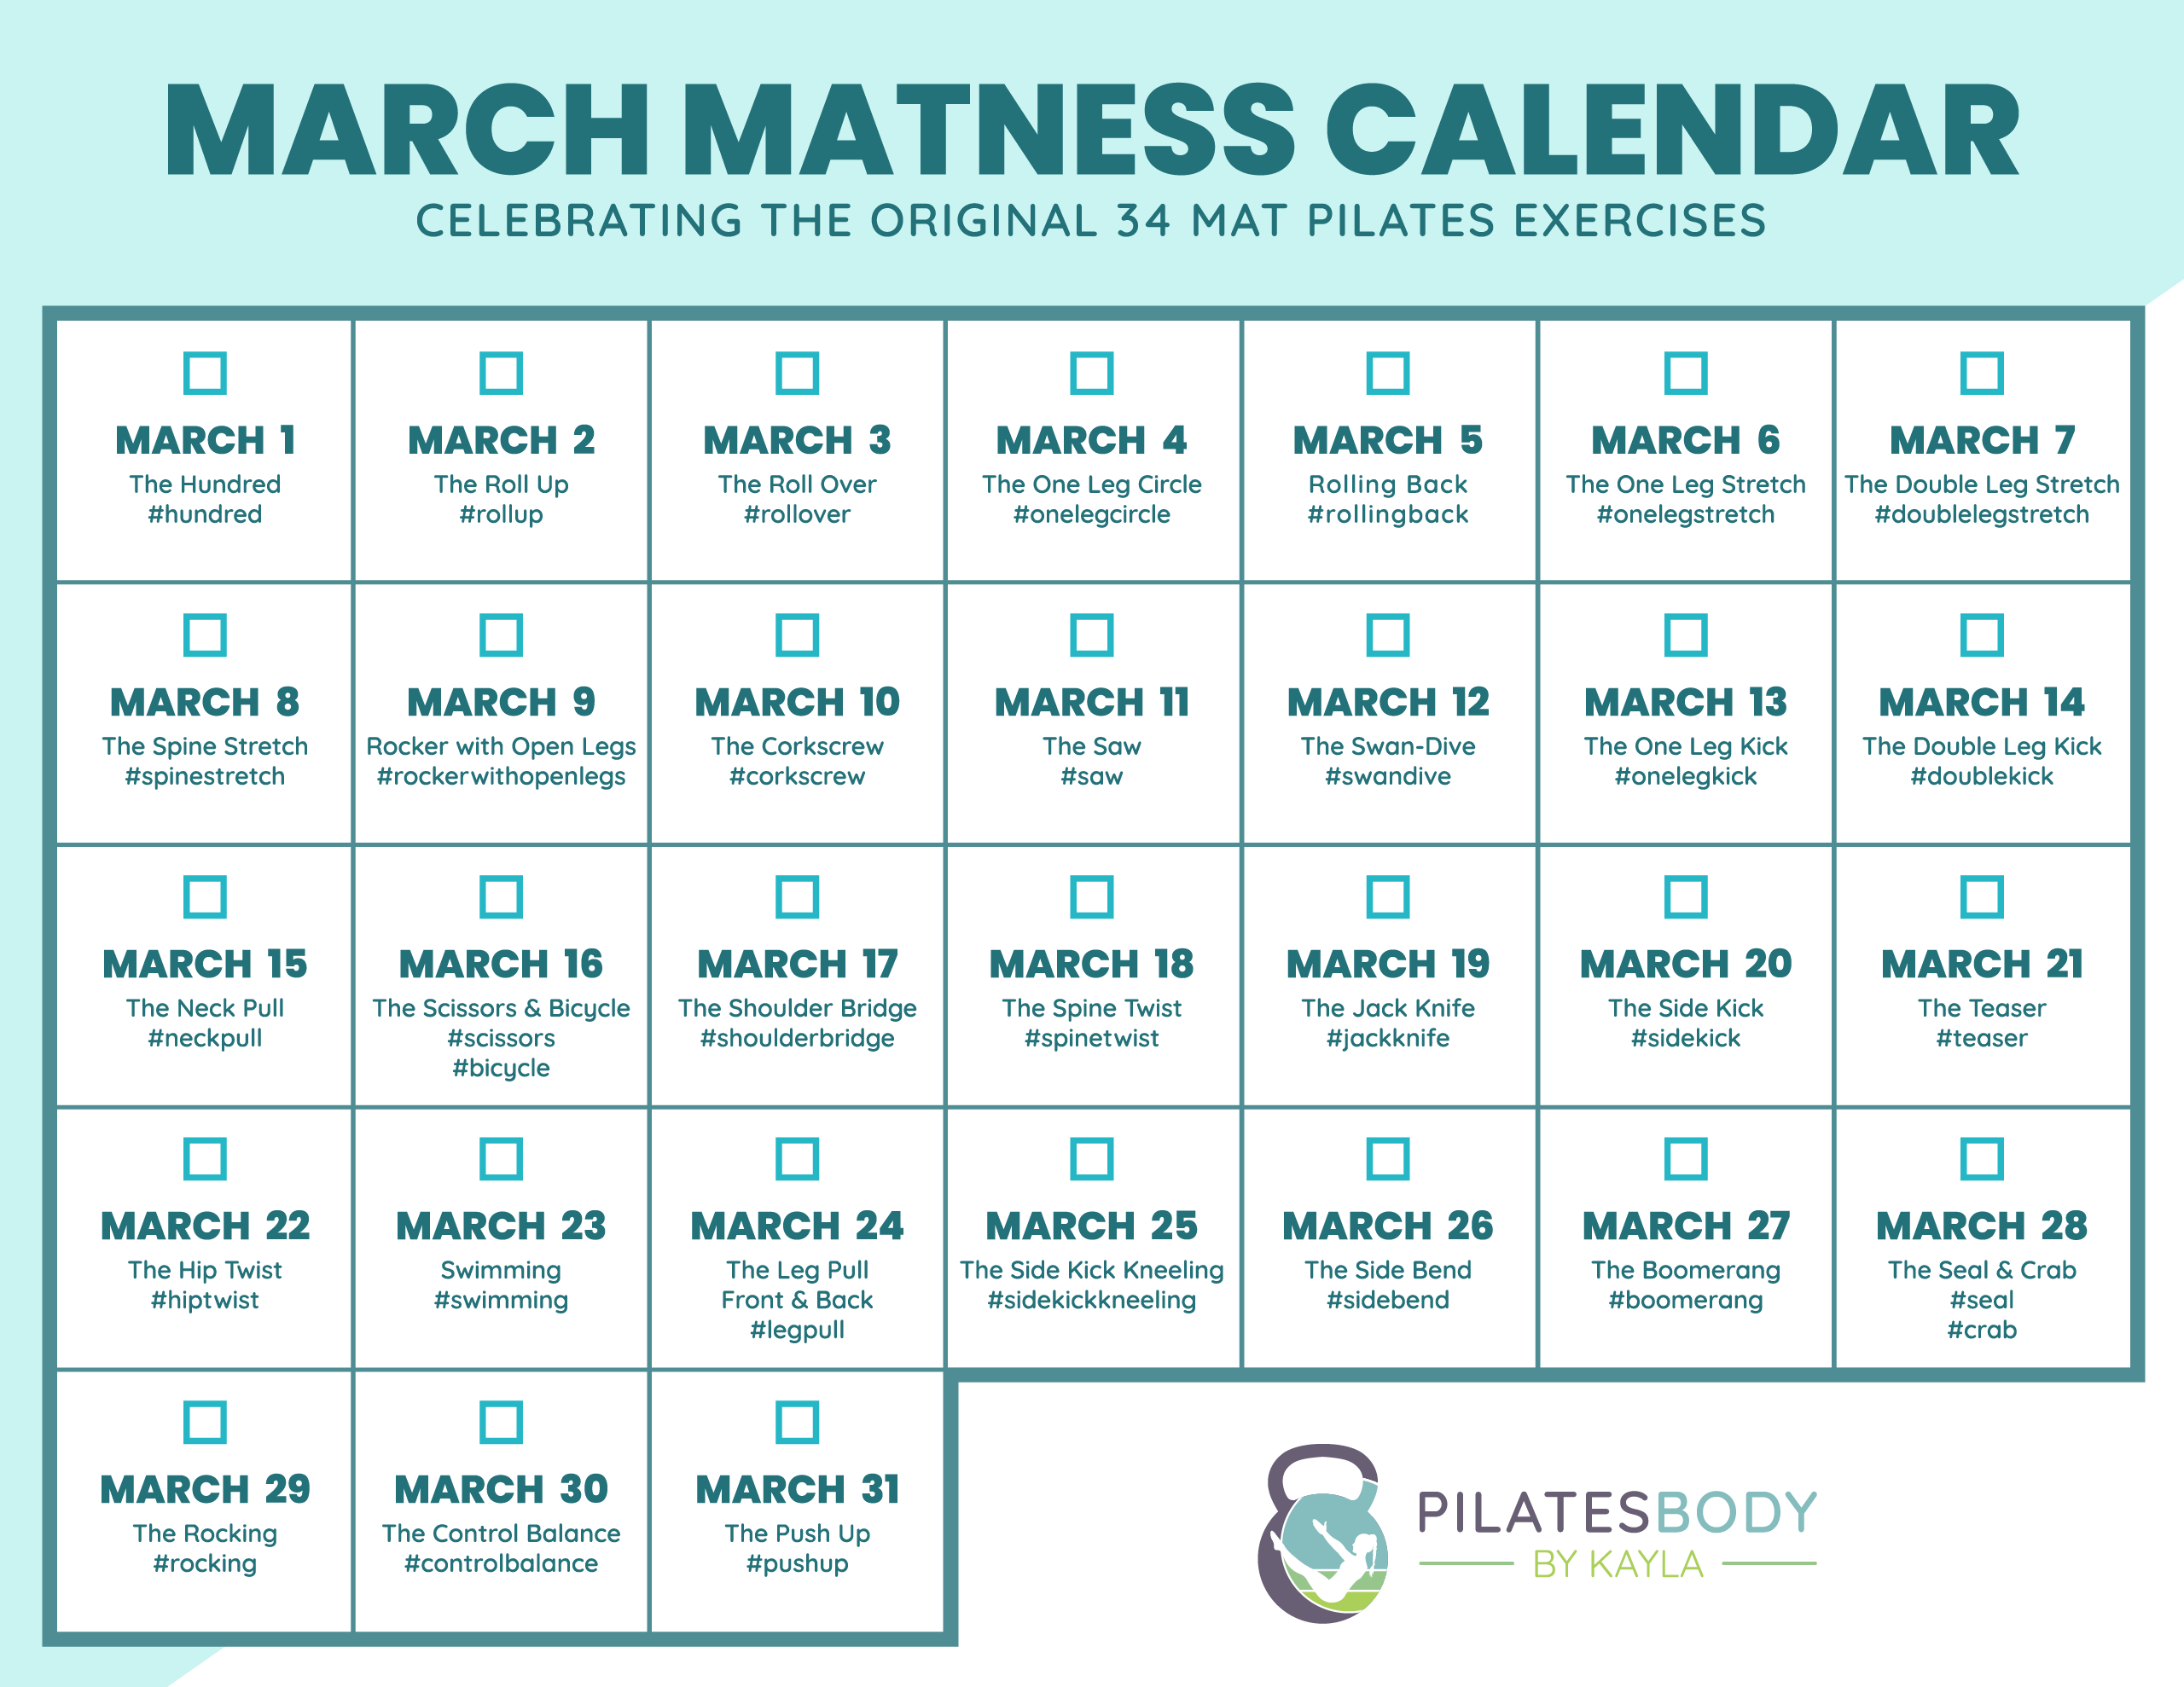 What is March MATness? PILATESBODY by Kayla